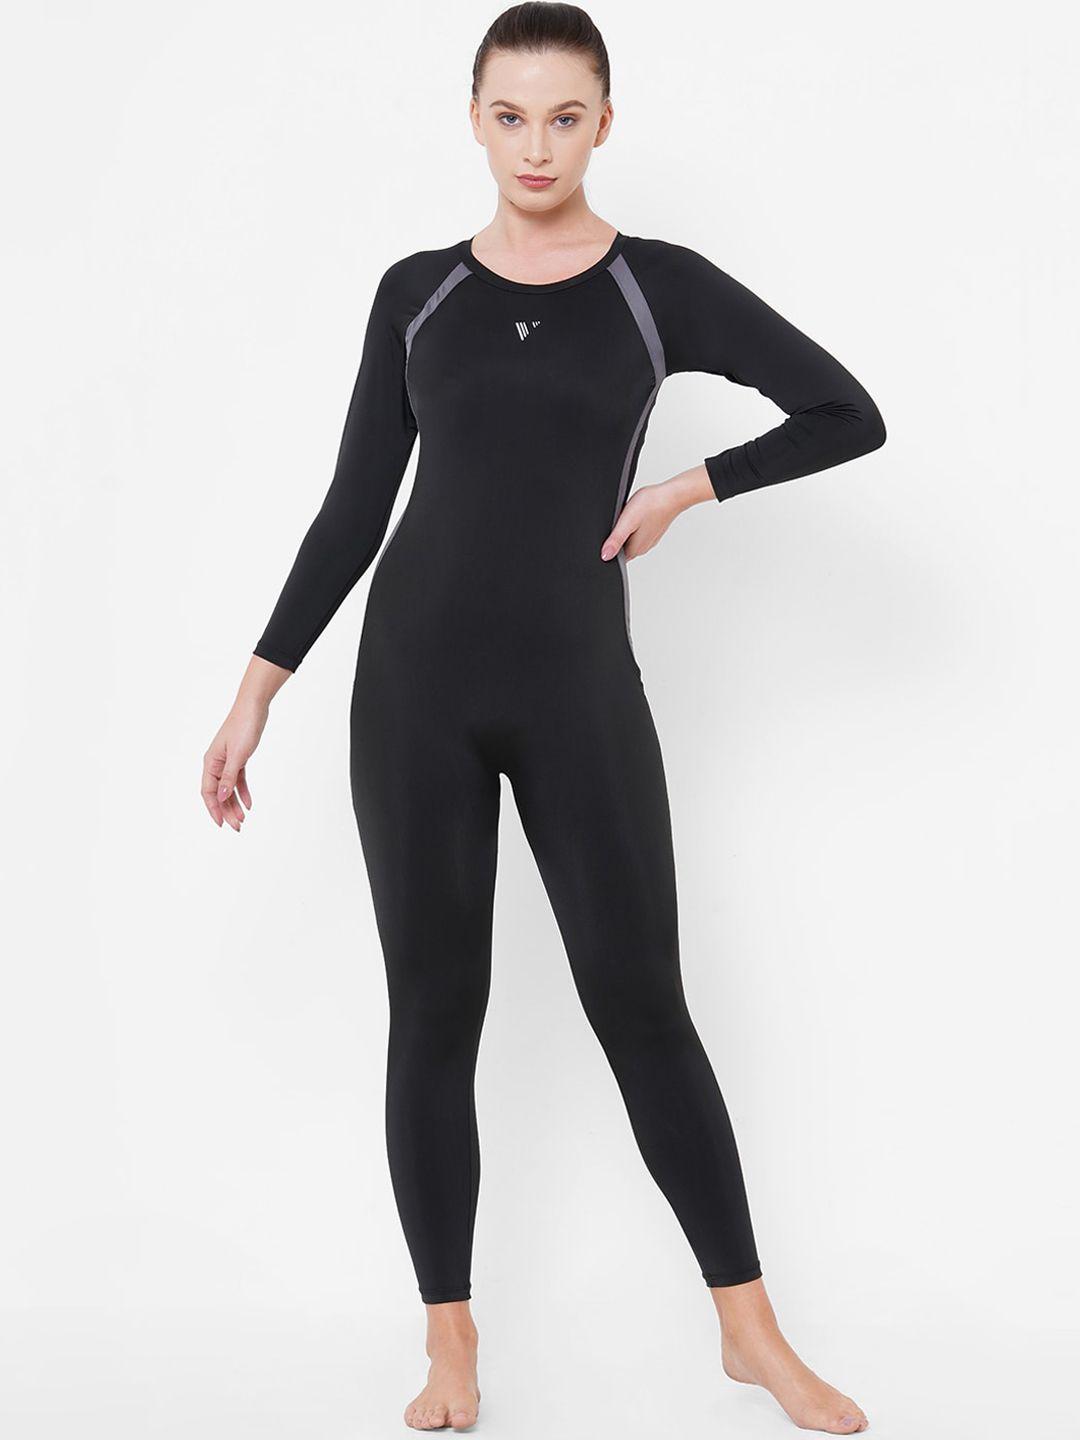 veloz women black solid swimwear bodysuit